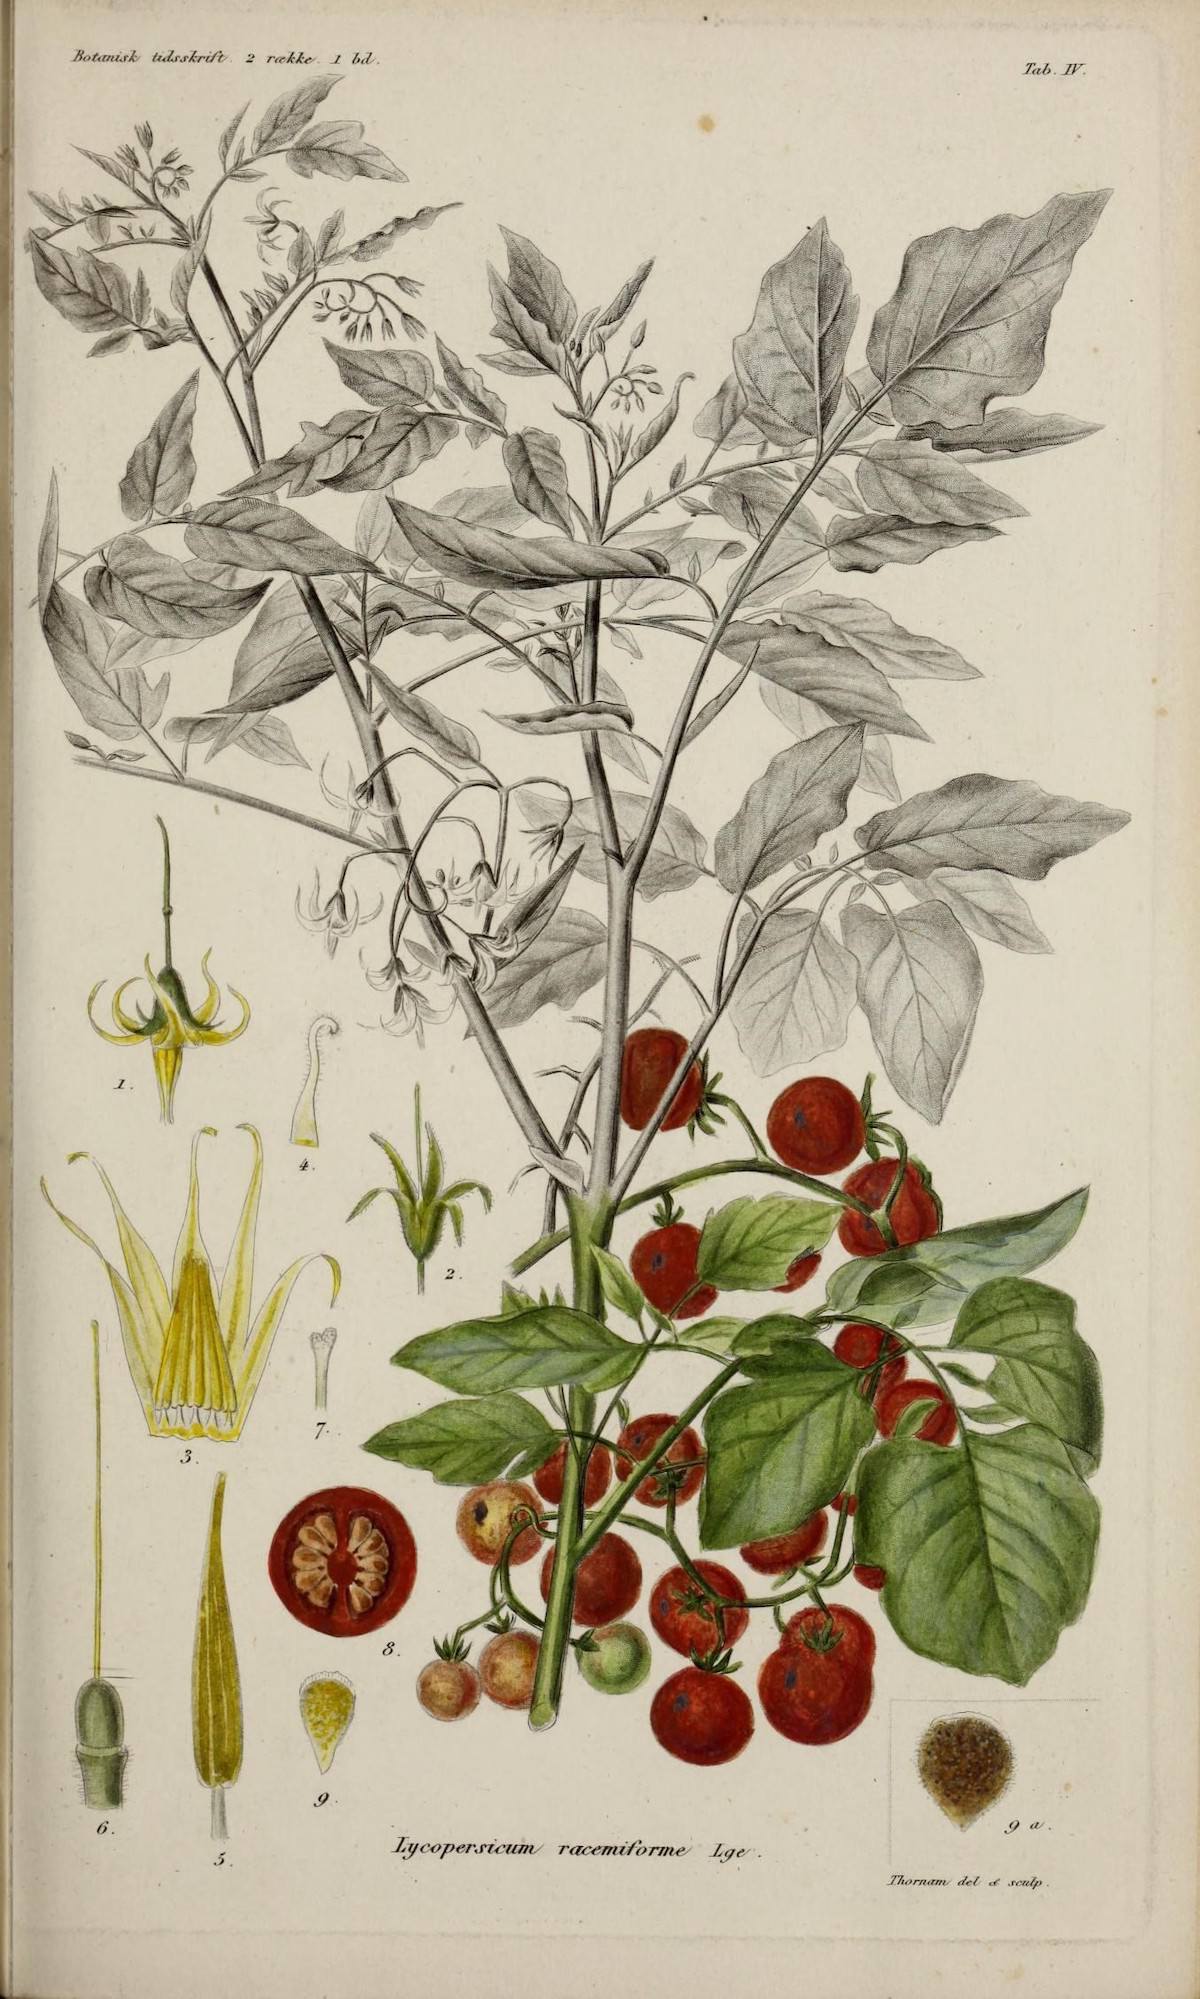 Solanum pimpinellifolium è una specie selvatica di pomodoro